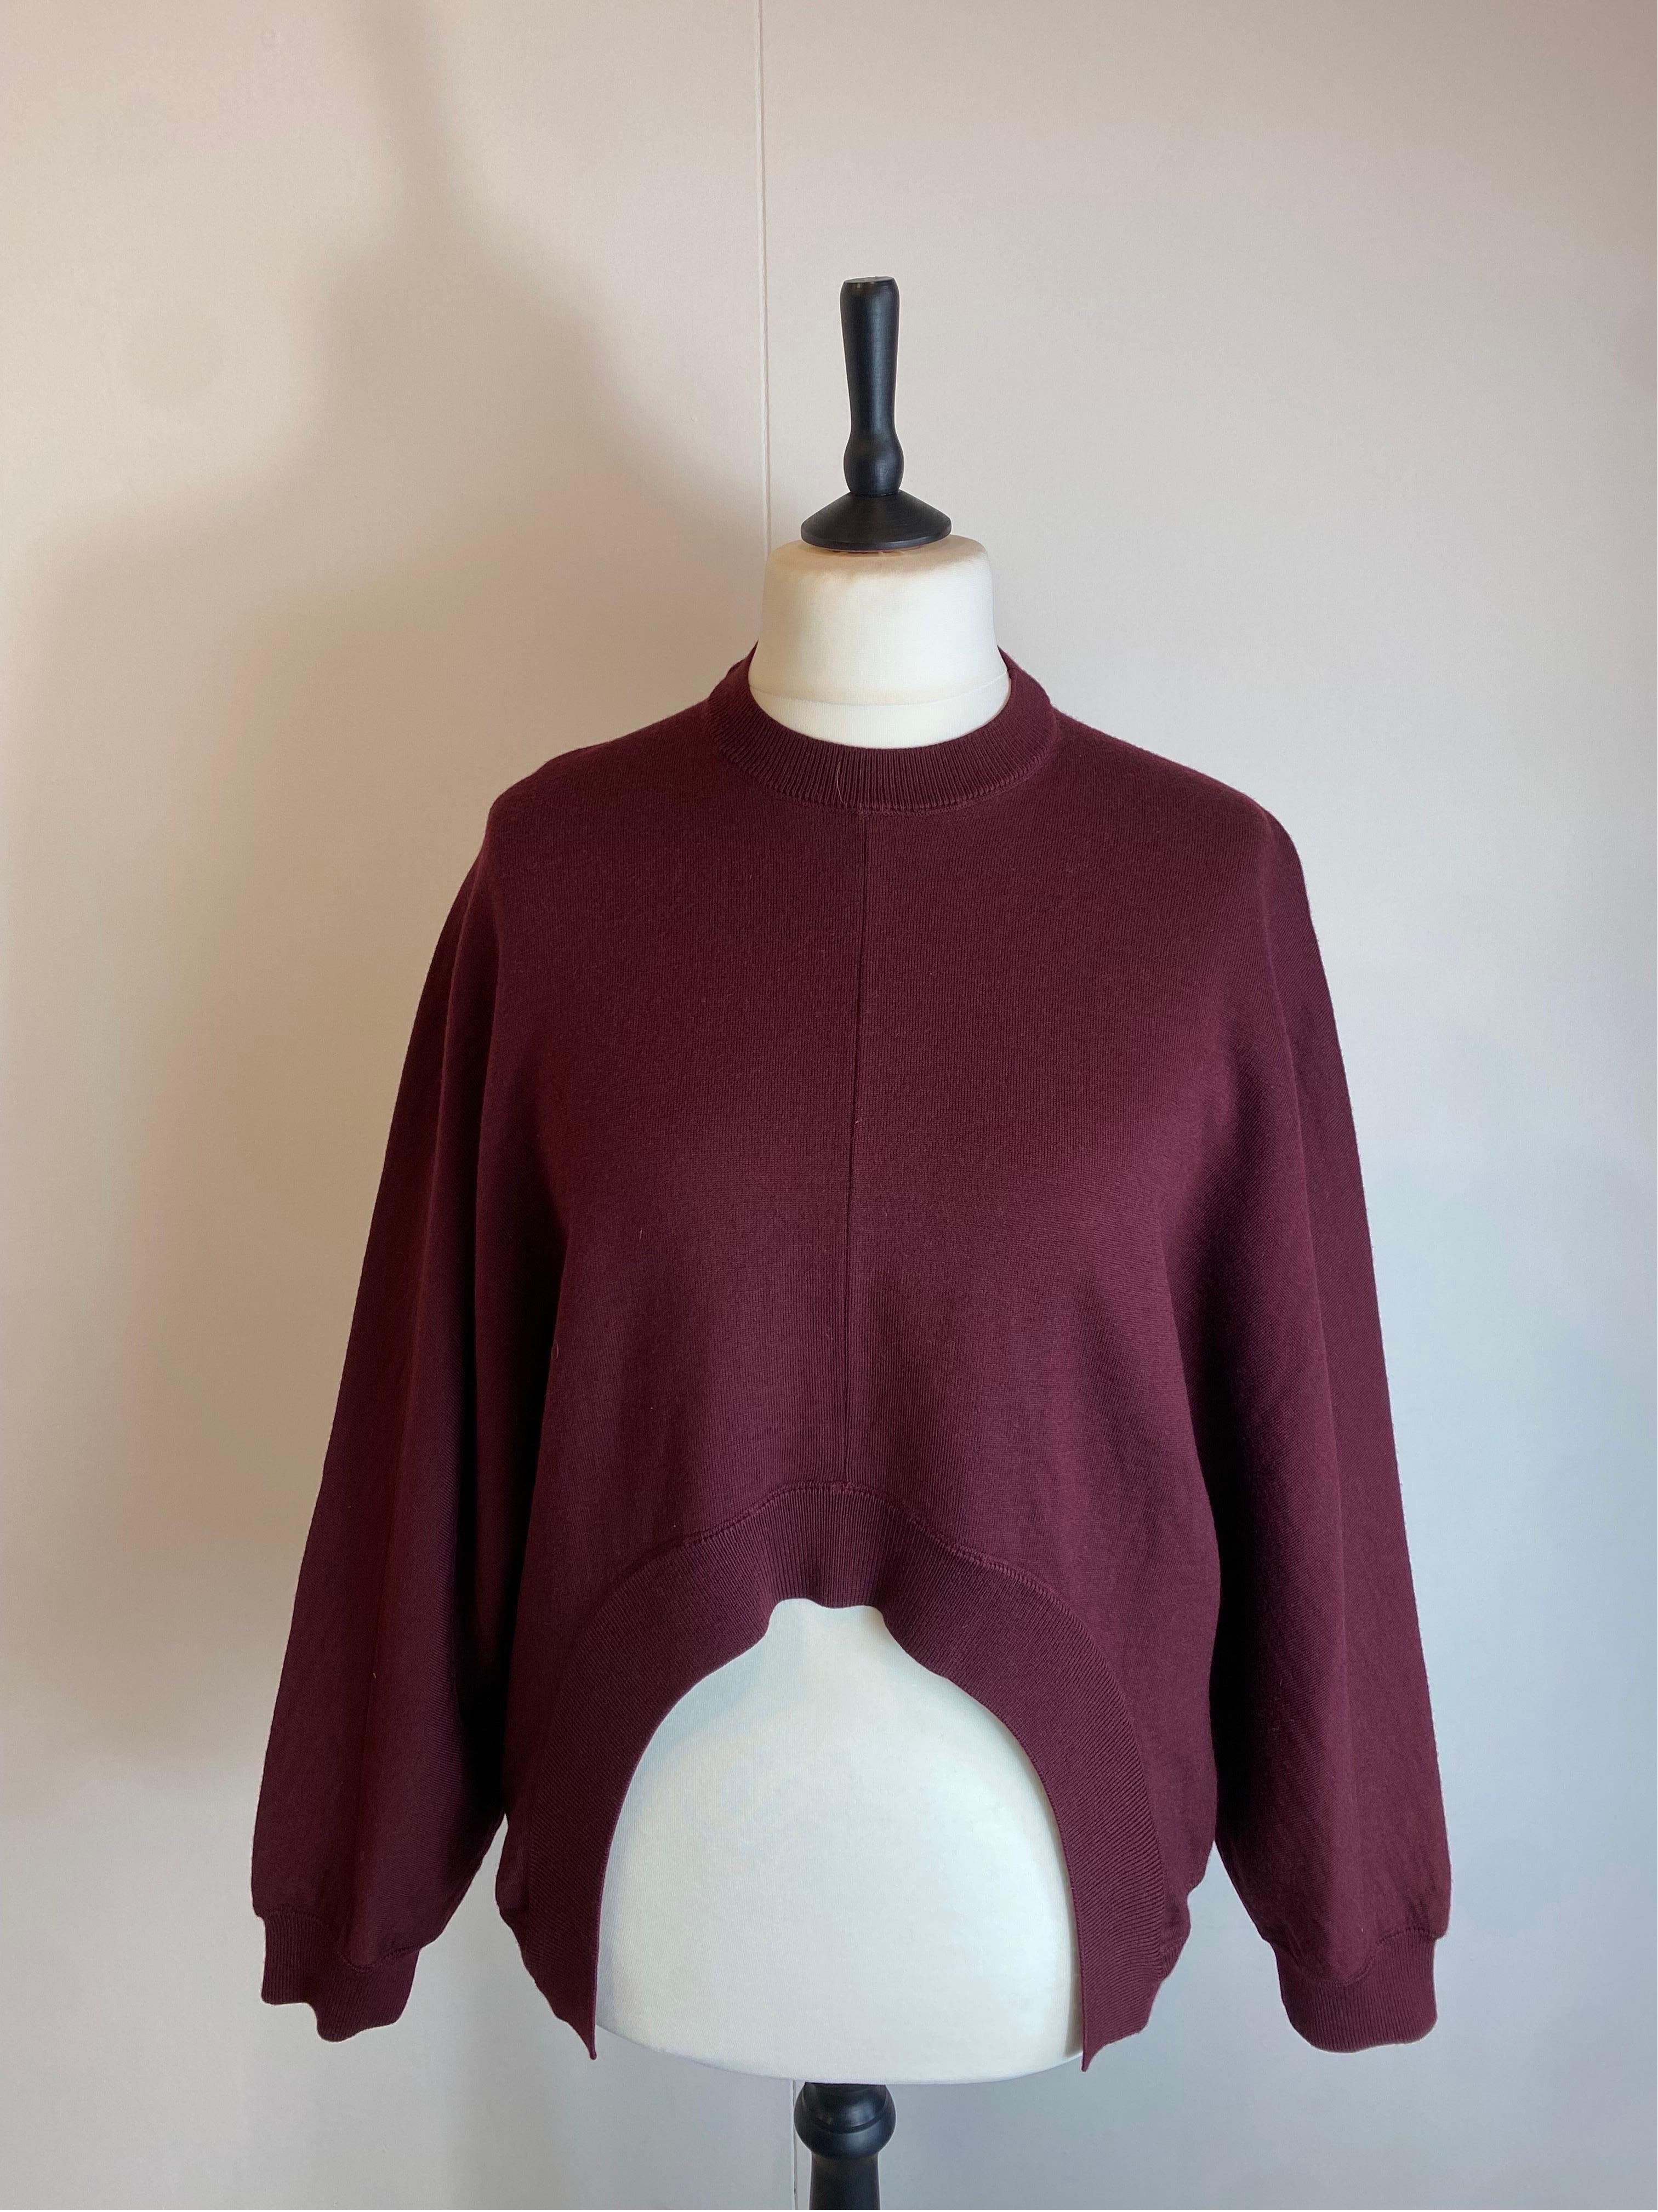 Marni Bordeaux sweatshirt.
In virgin wool. Elastic material.
Italian size 40. Large fit.
Shoulders 42 cm
Minimum length 42 cm
Maximum length 70 cm
Very good condition. It shows minimal signs of normal use.